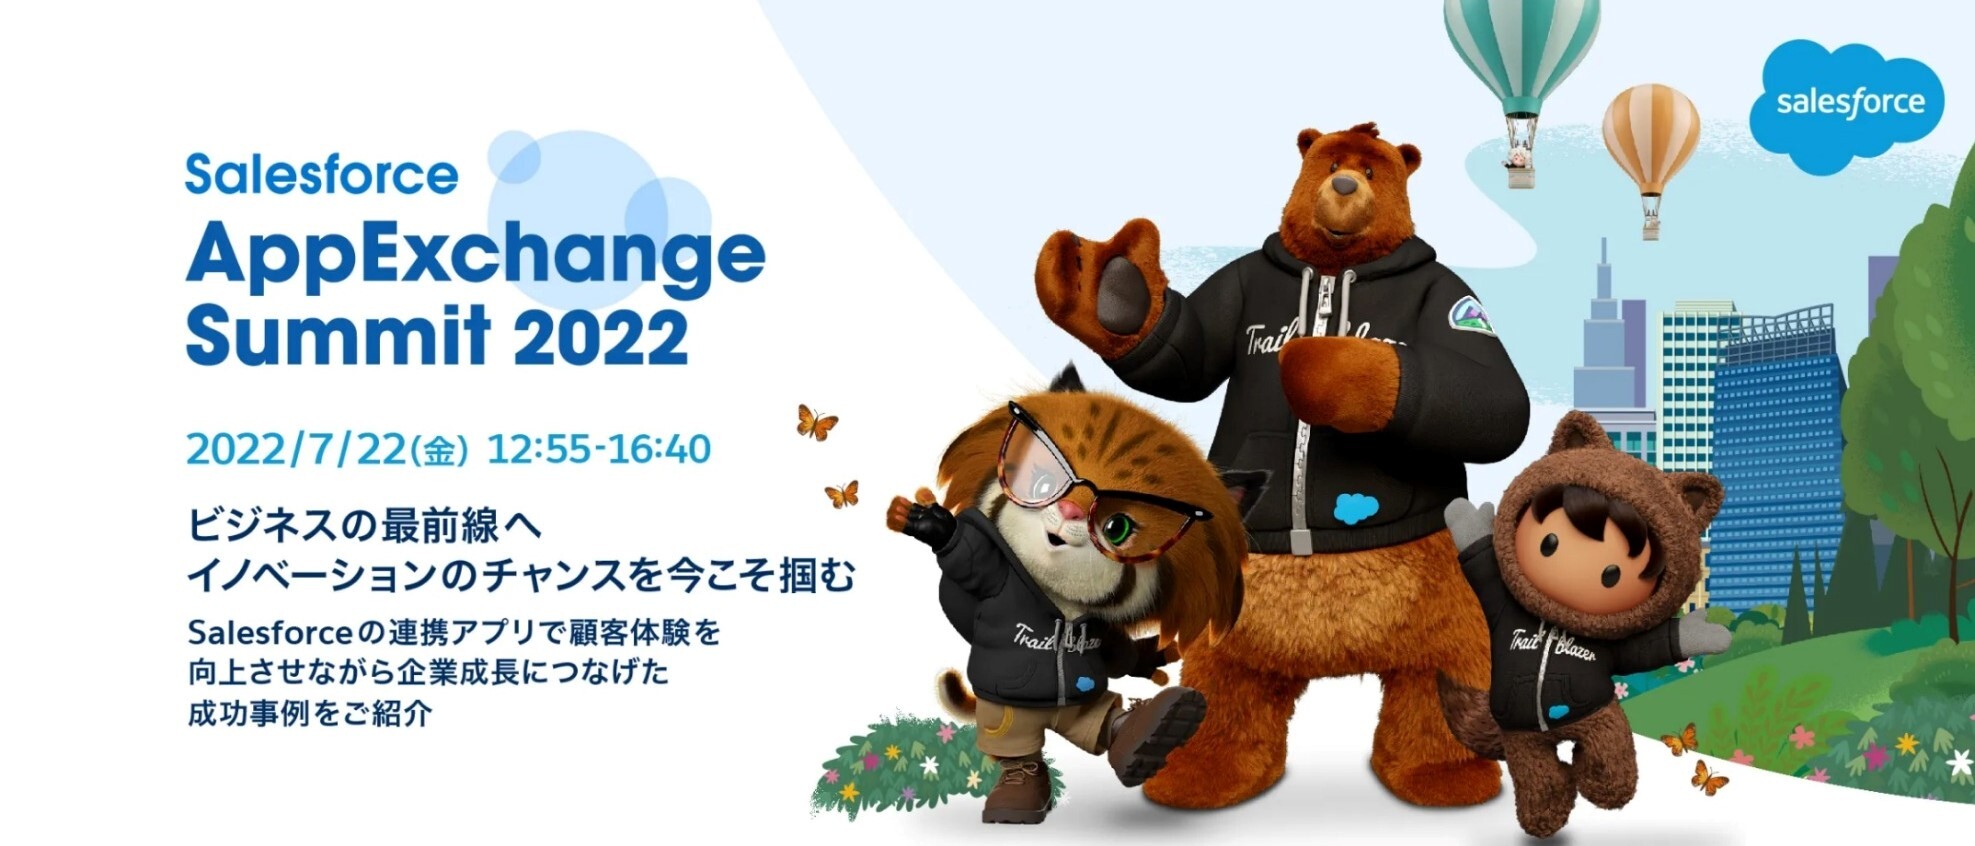 Salesforce AppExchange Summit 2022